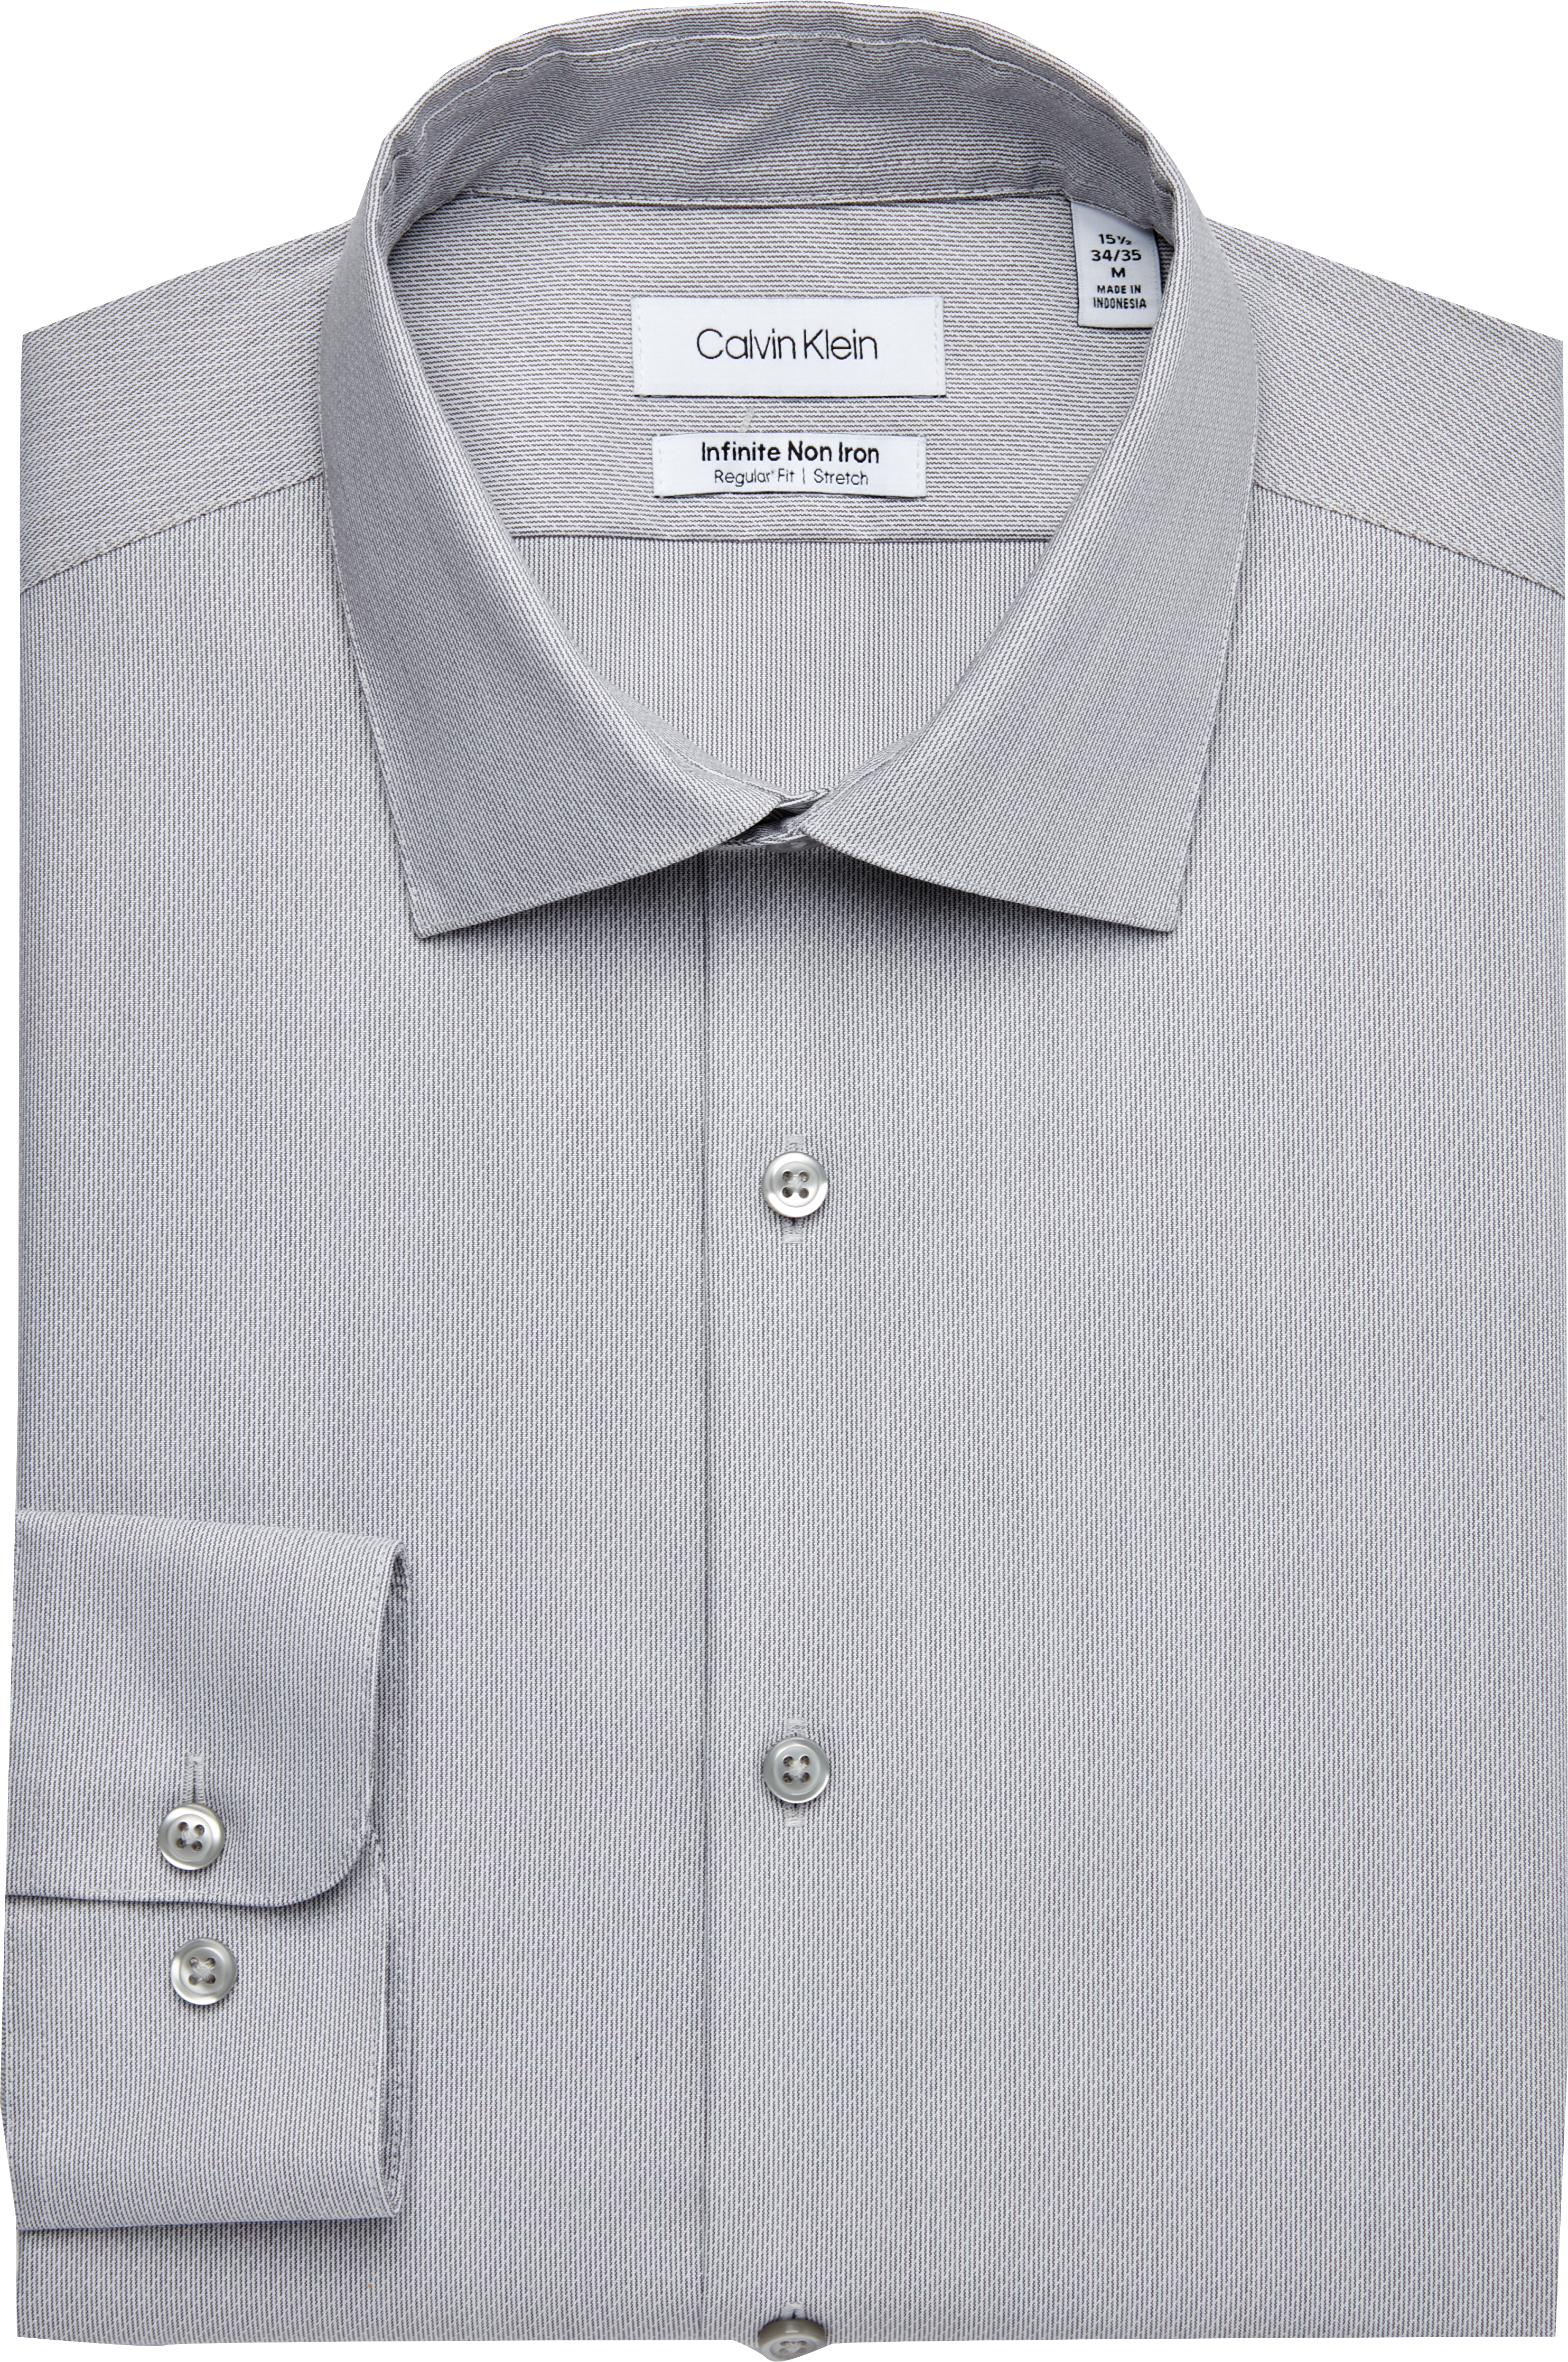 Calvin Klein Infinite Graphite Regular Fit Dress Shirt - Men's Sale ...